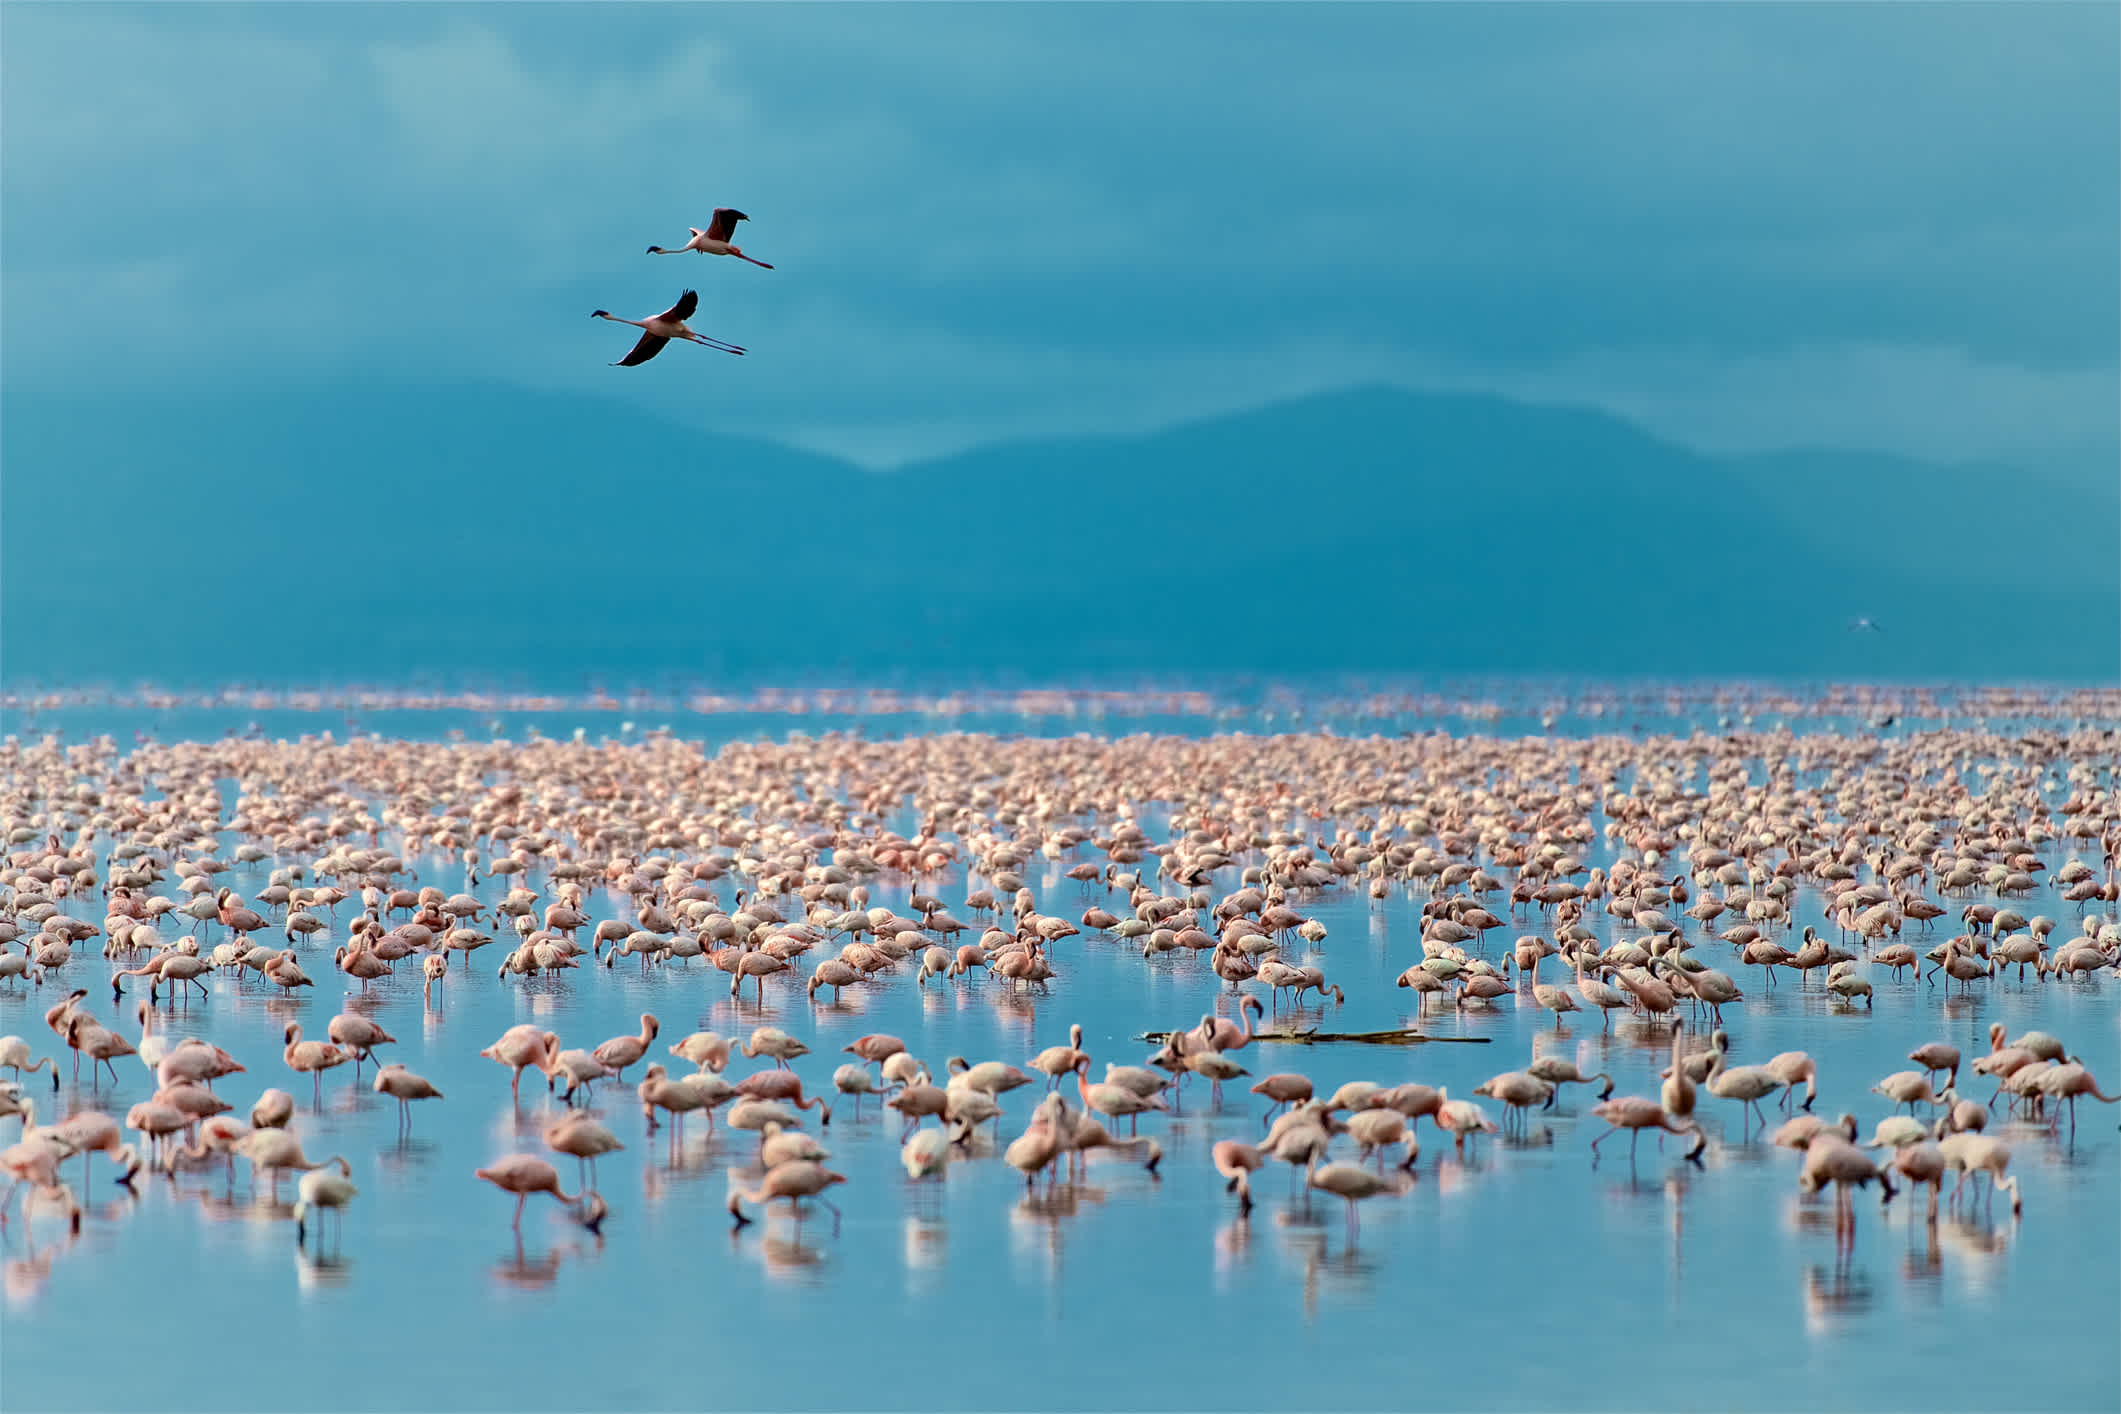 5. Lake Manyara National Park